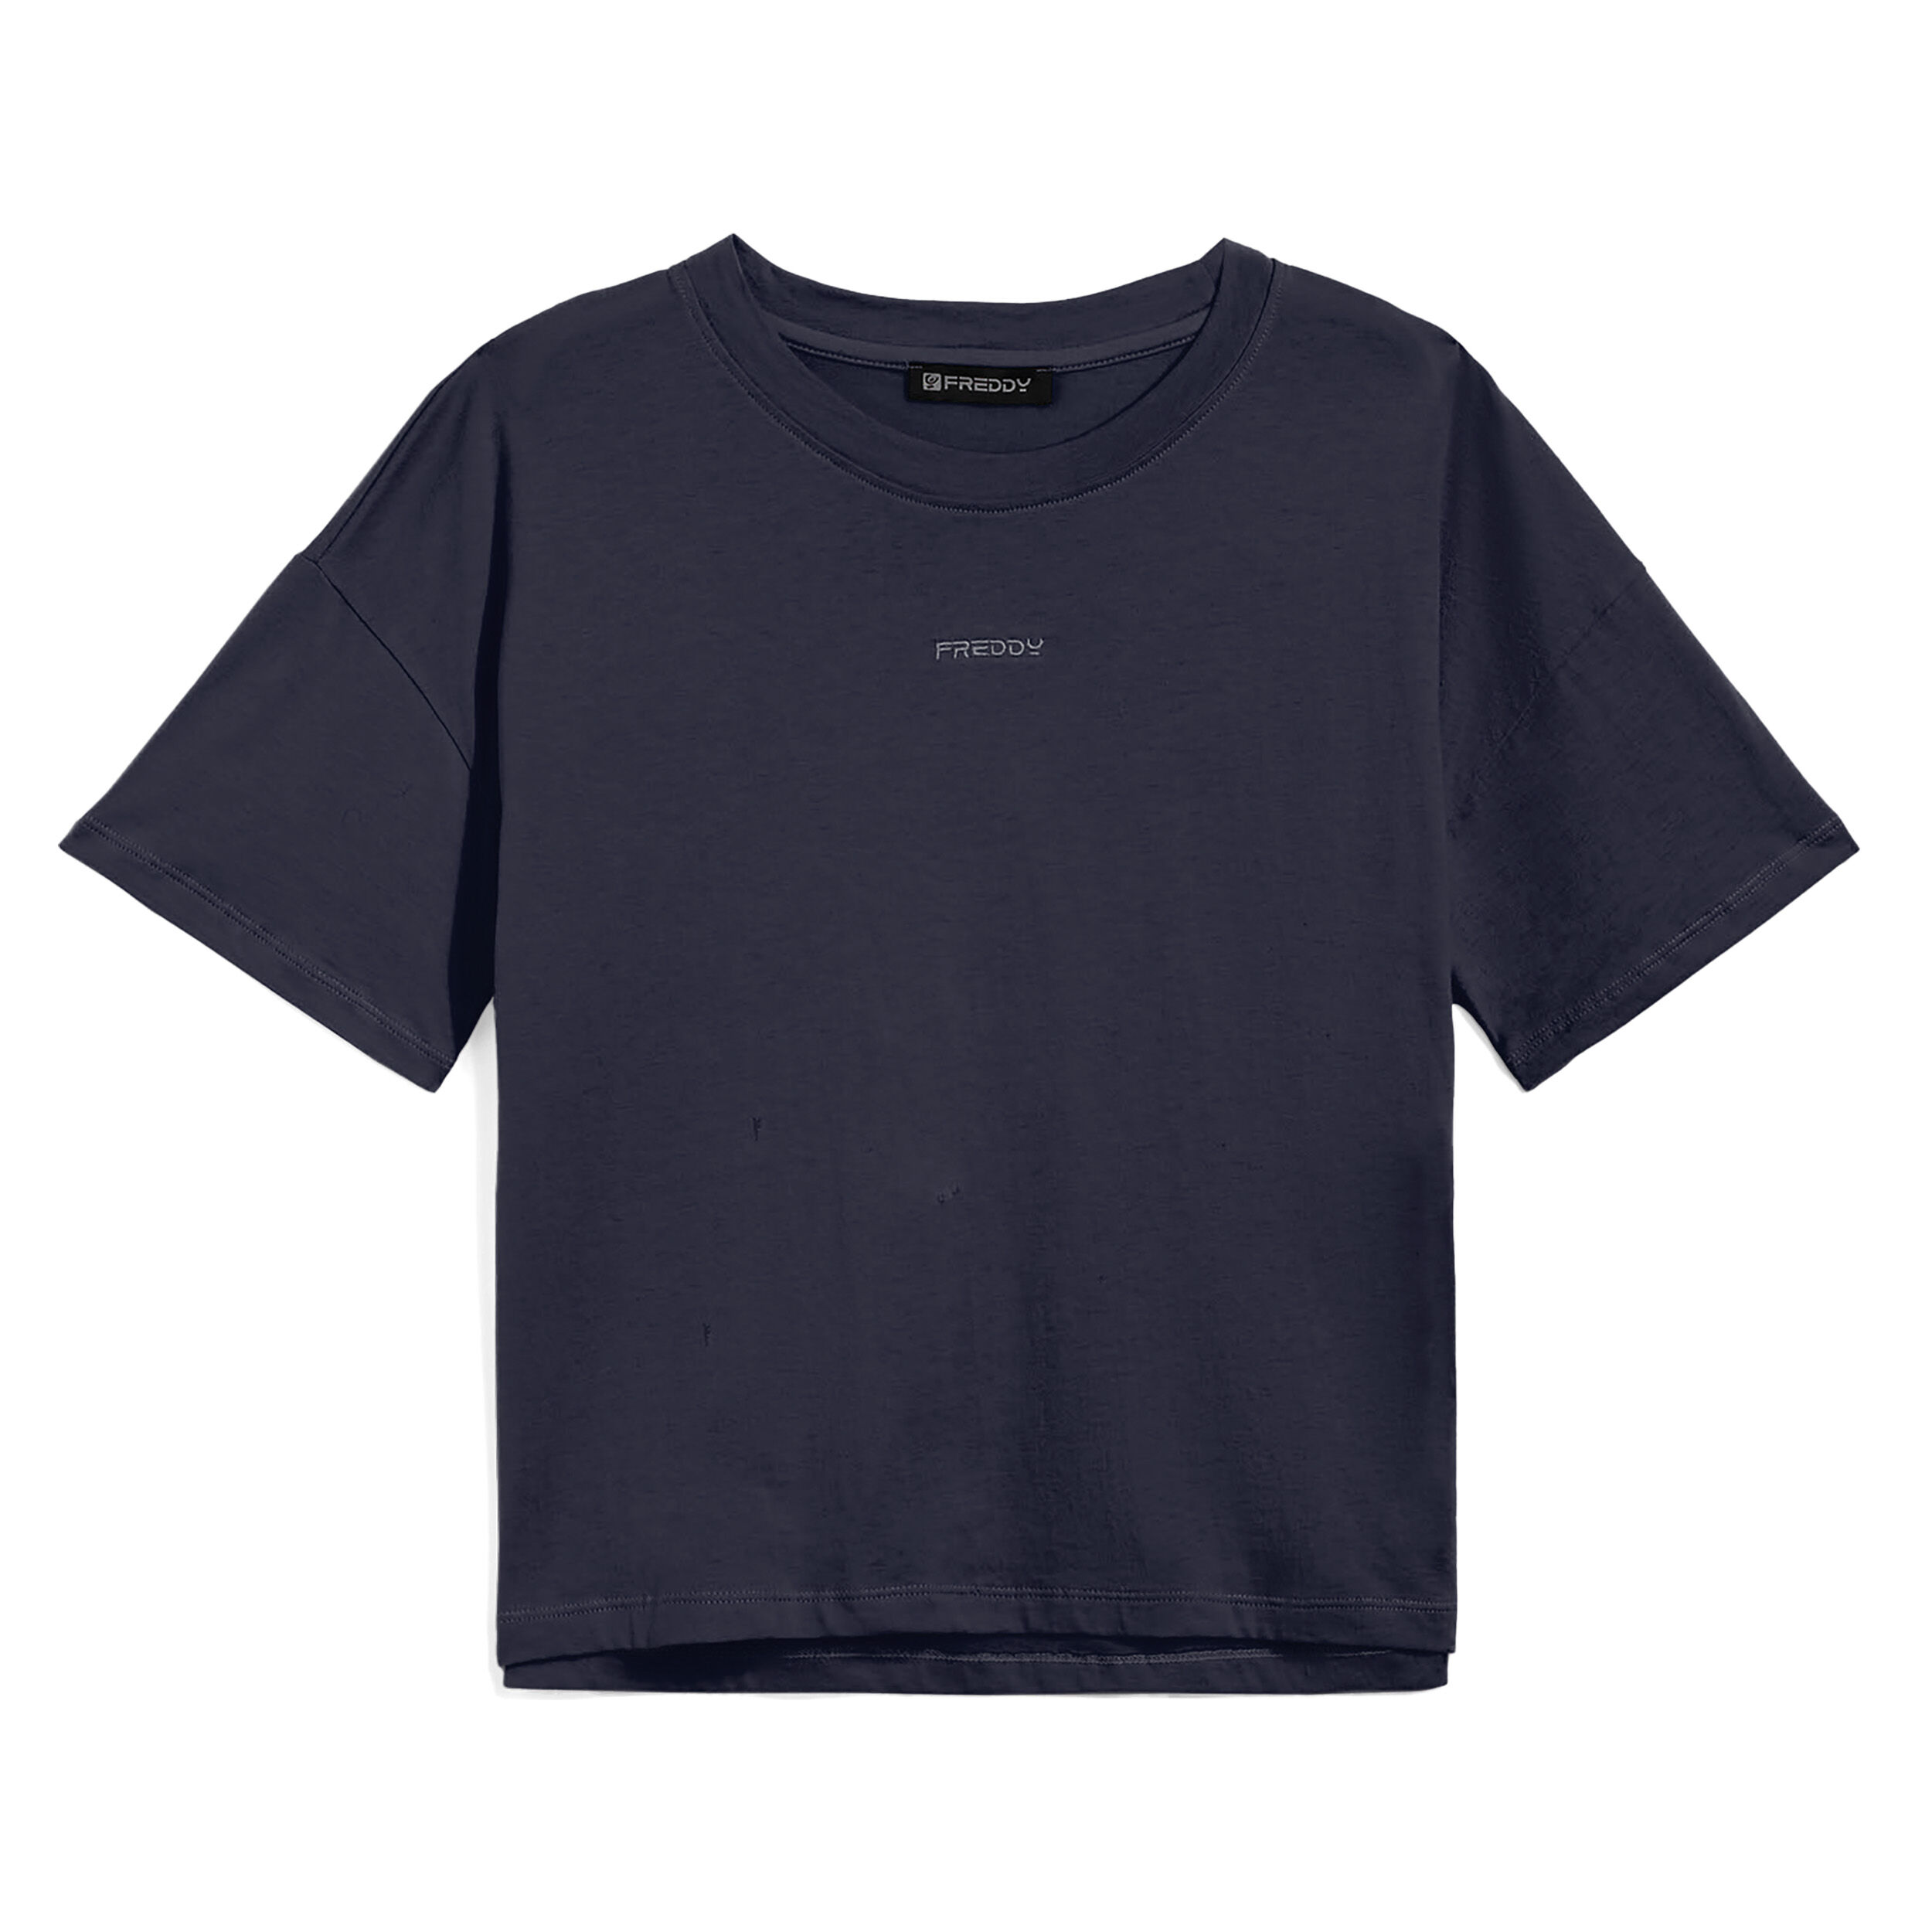 Freddy T-shirt da donna comfort fit in jersey leggero Blu Navy Donna Xxs